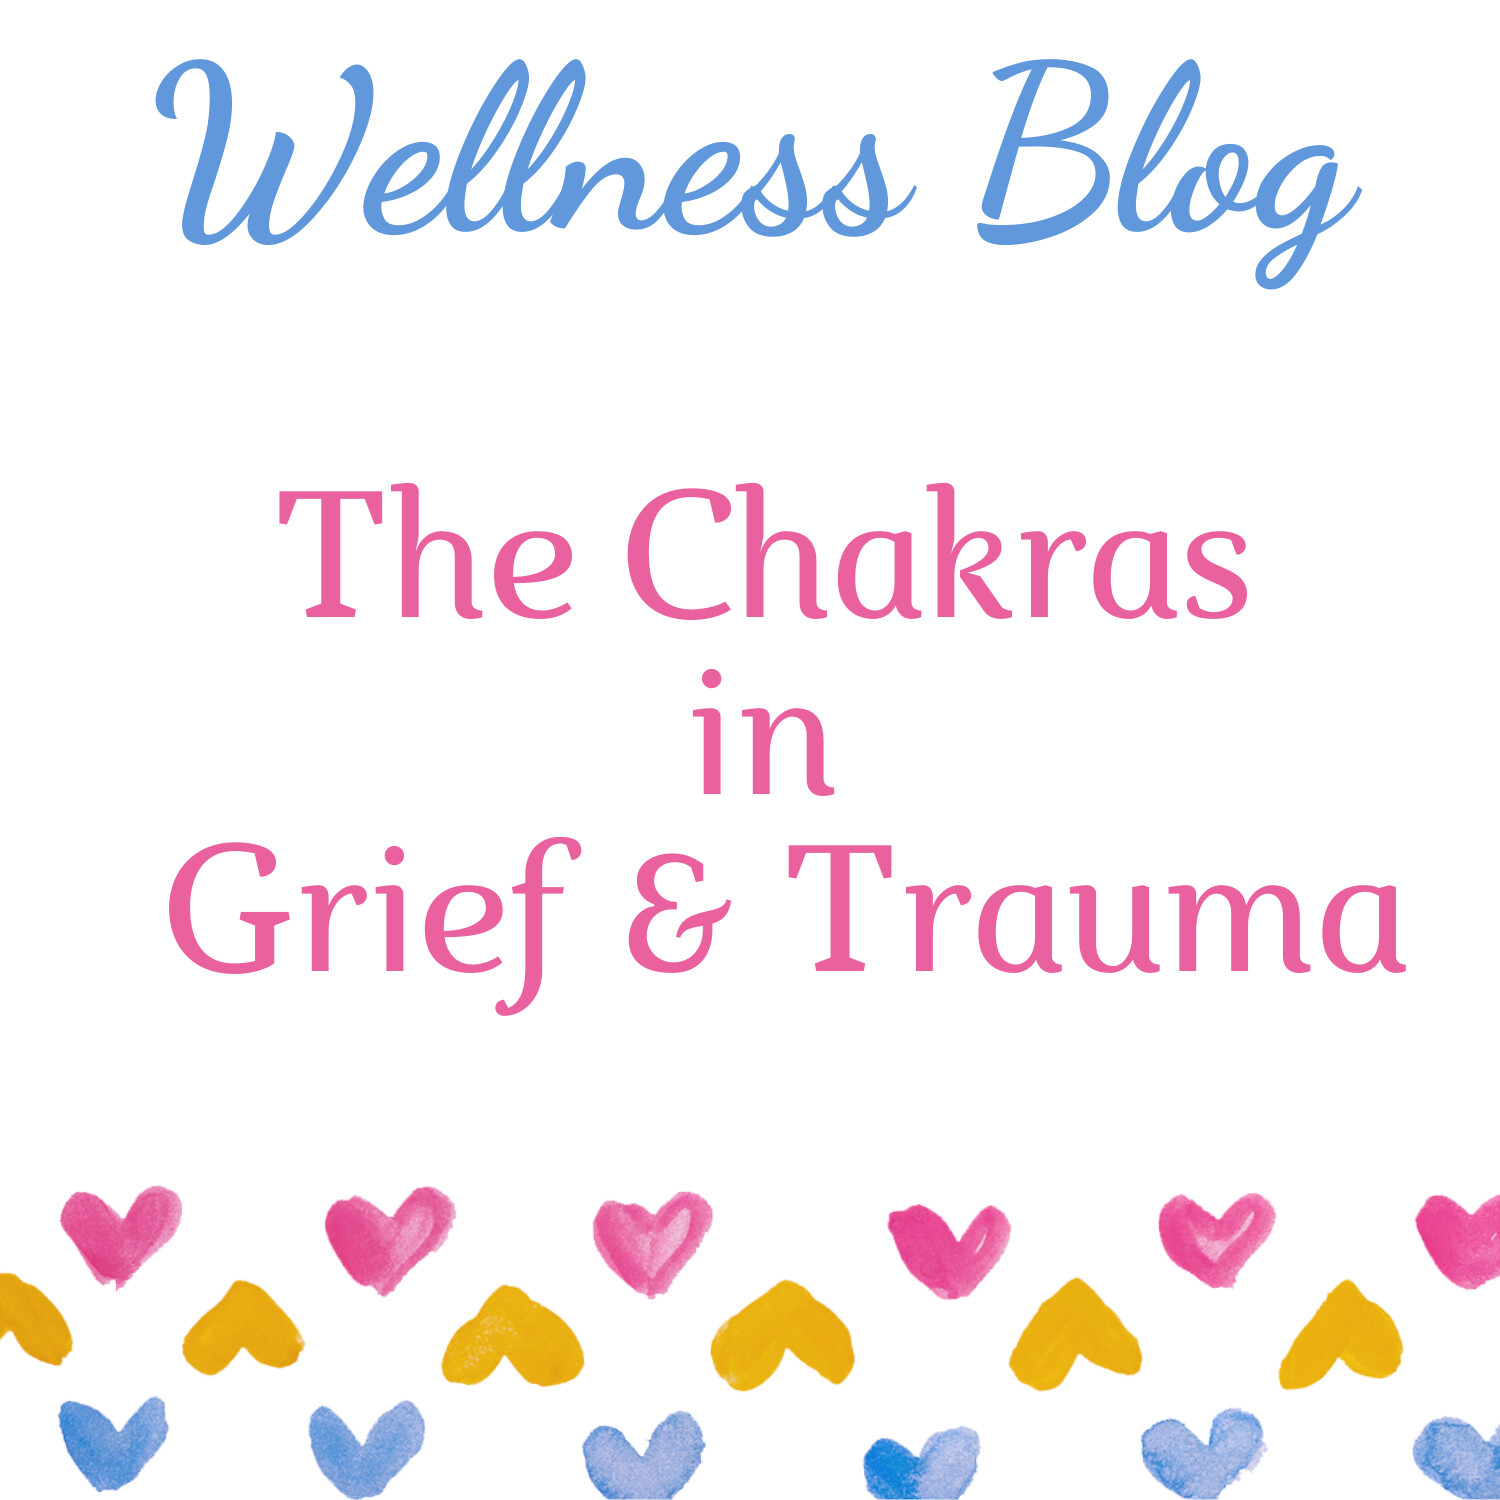 The Chakras in Grief & Trauma